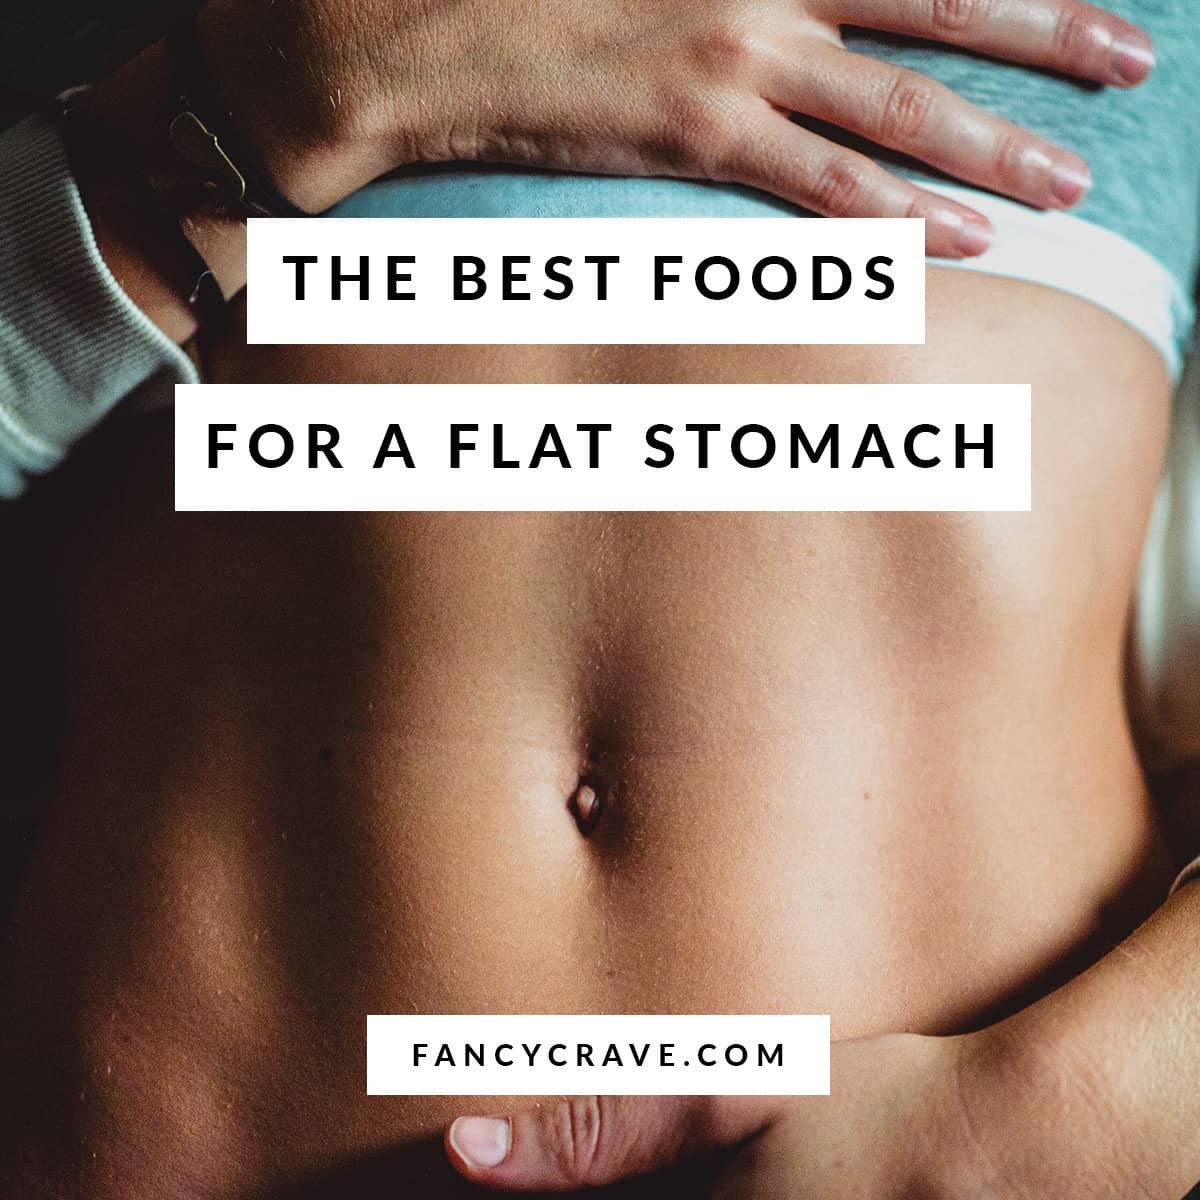 Flat stomach